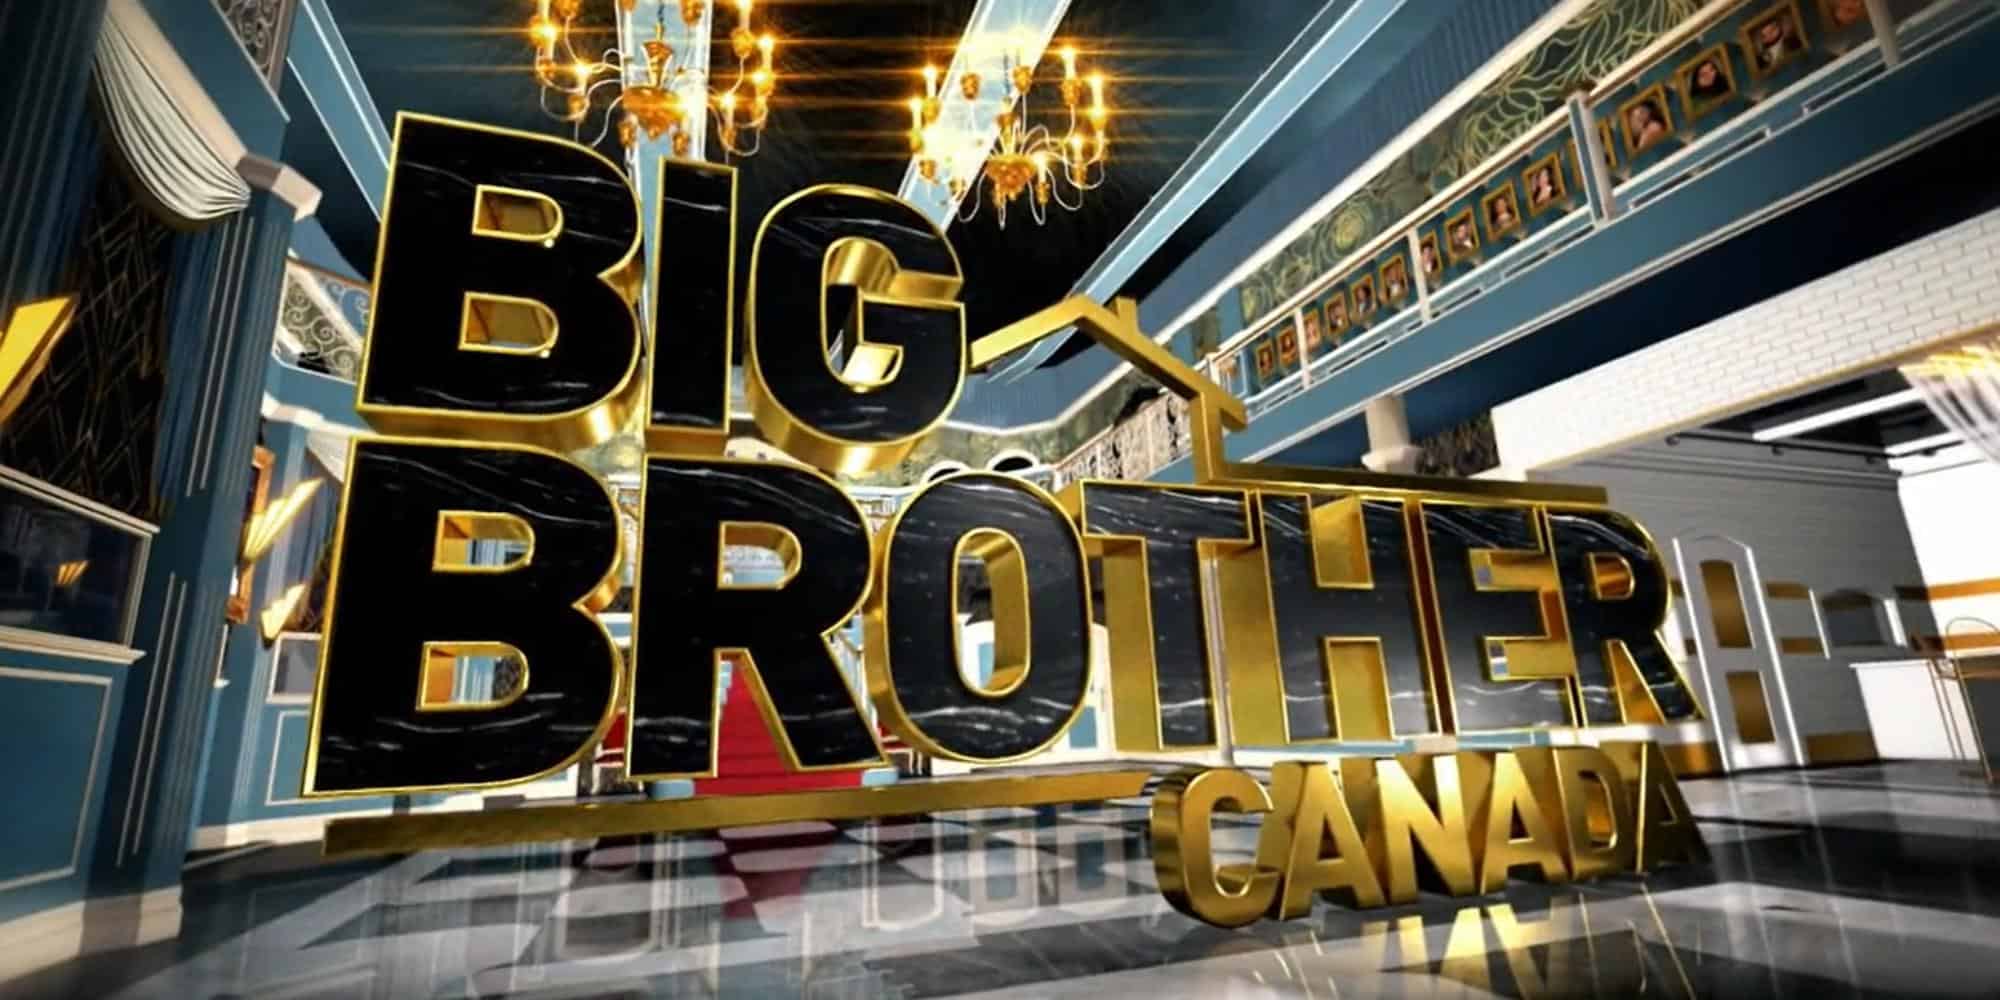 Big Brother Canada Season 11 Episode 8 Release Date